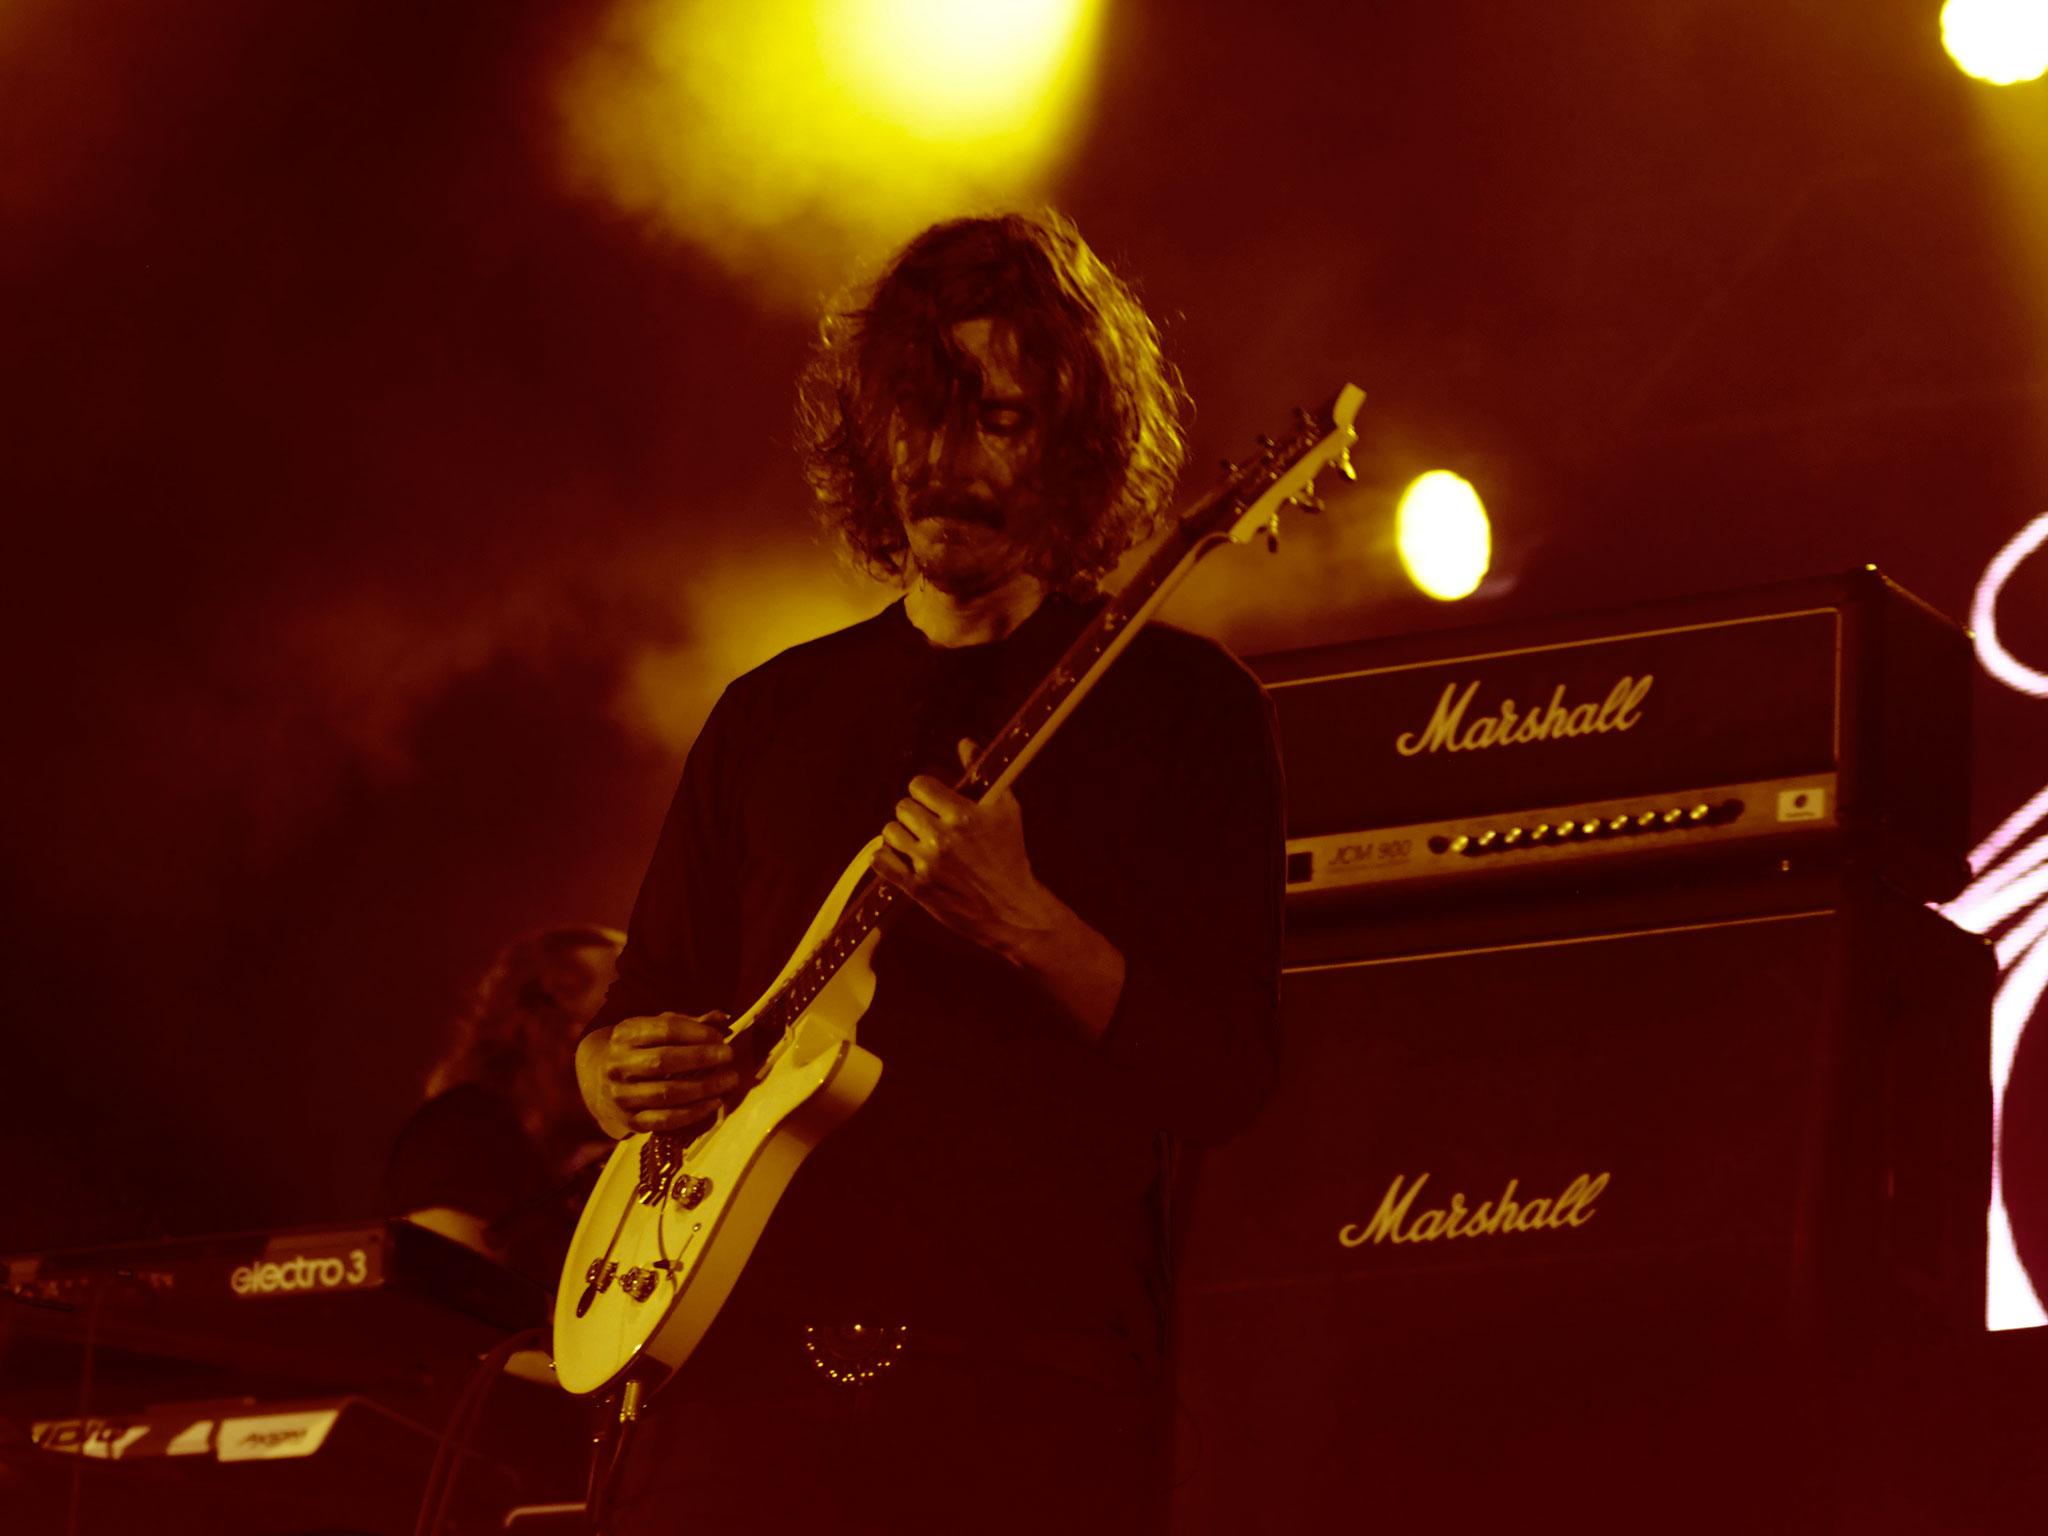 Opeth vocalist / guitarist Mikael Åkerfeldt